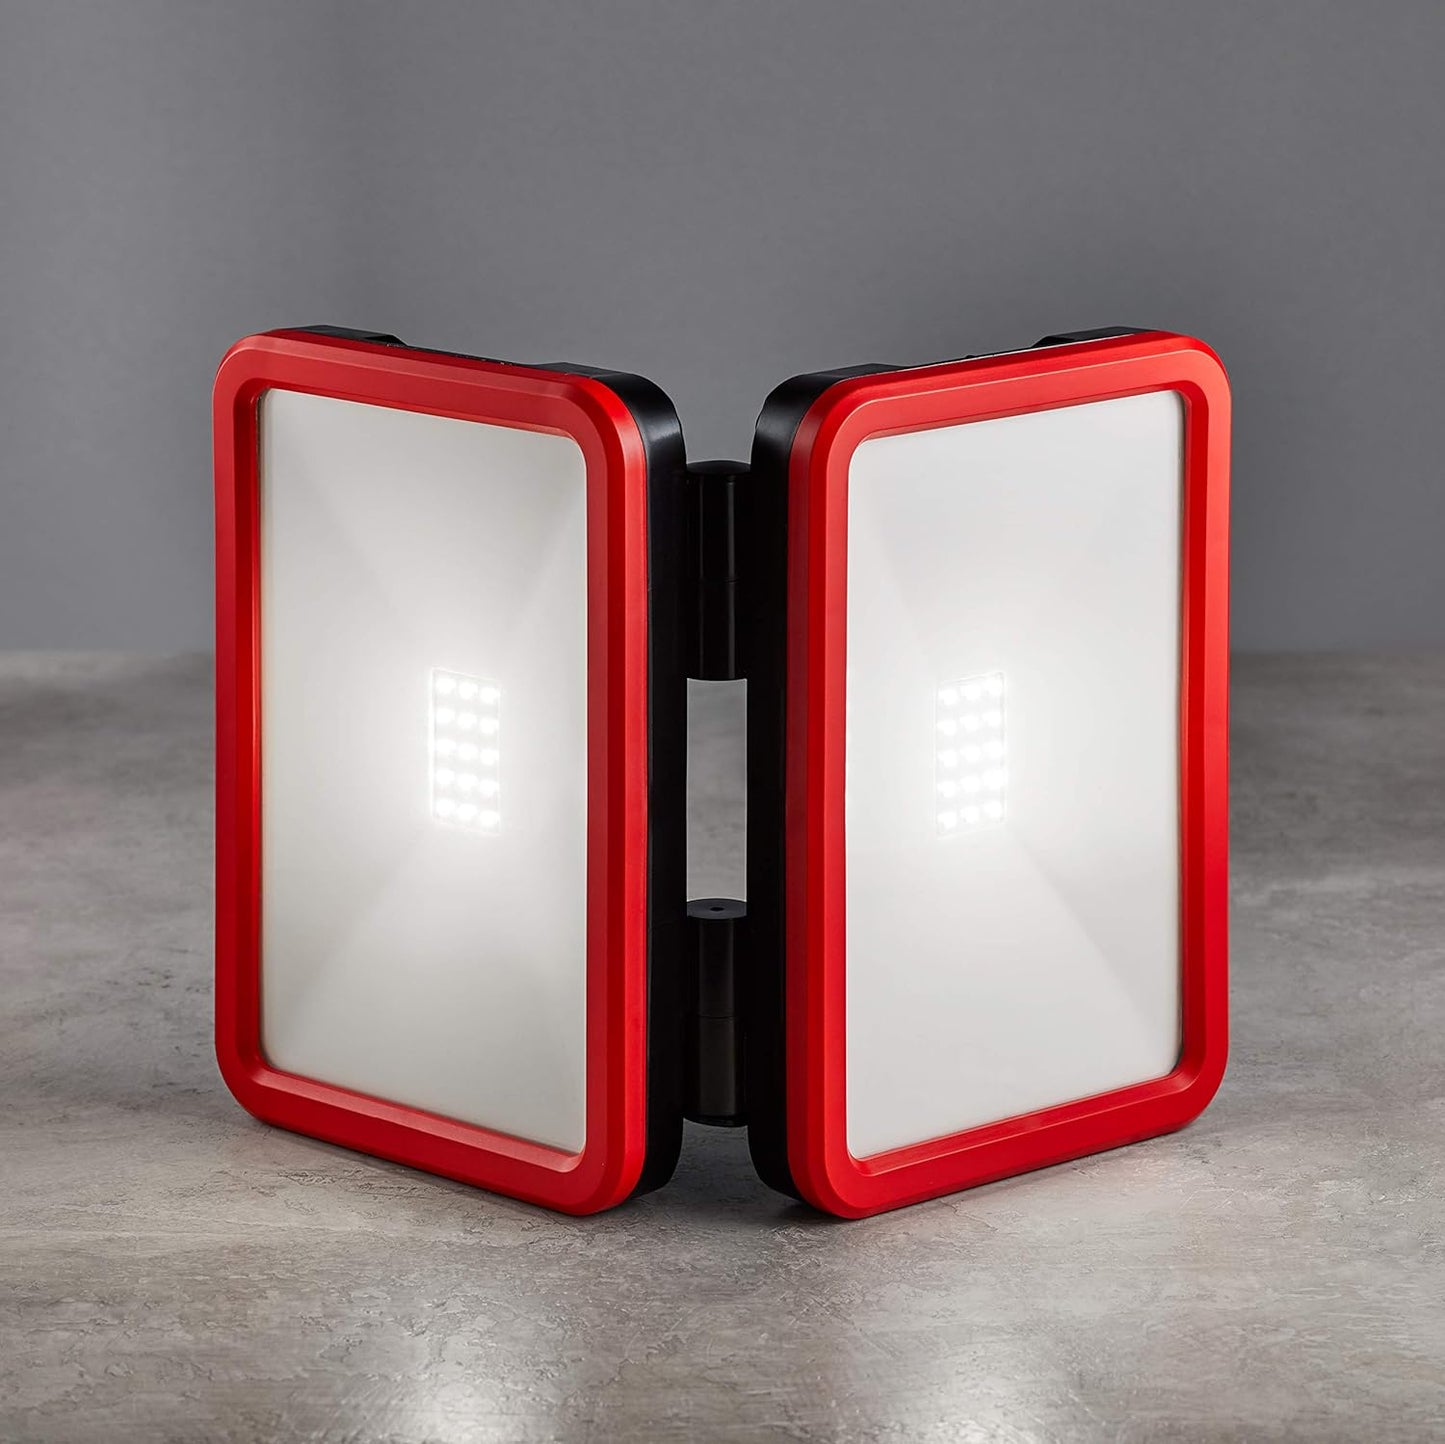 NEW - AmazonCommercial 2000LM, Foldable LED Work Light, 120V, 20W, 4000K, cool white - Retail $36